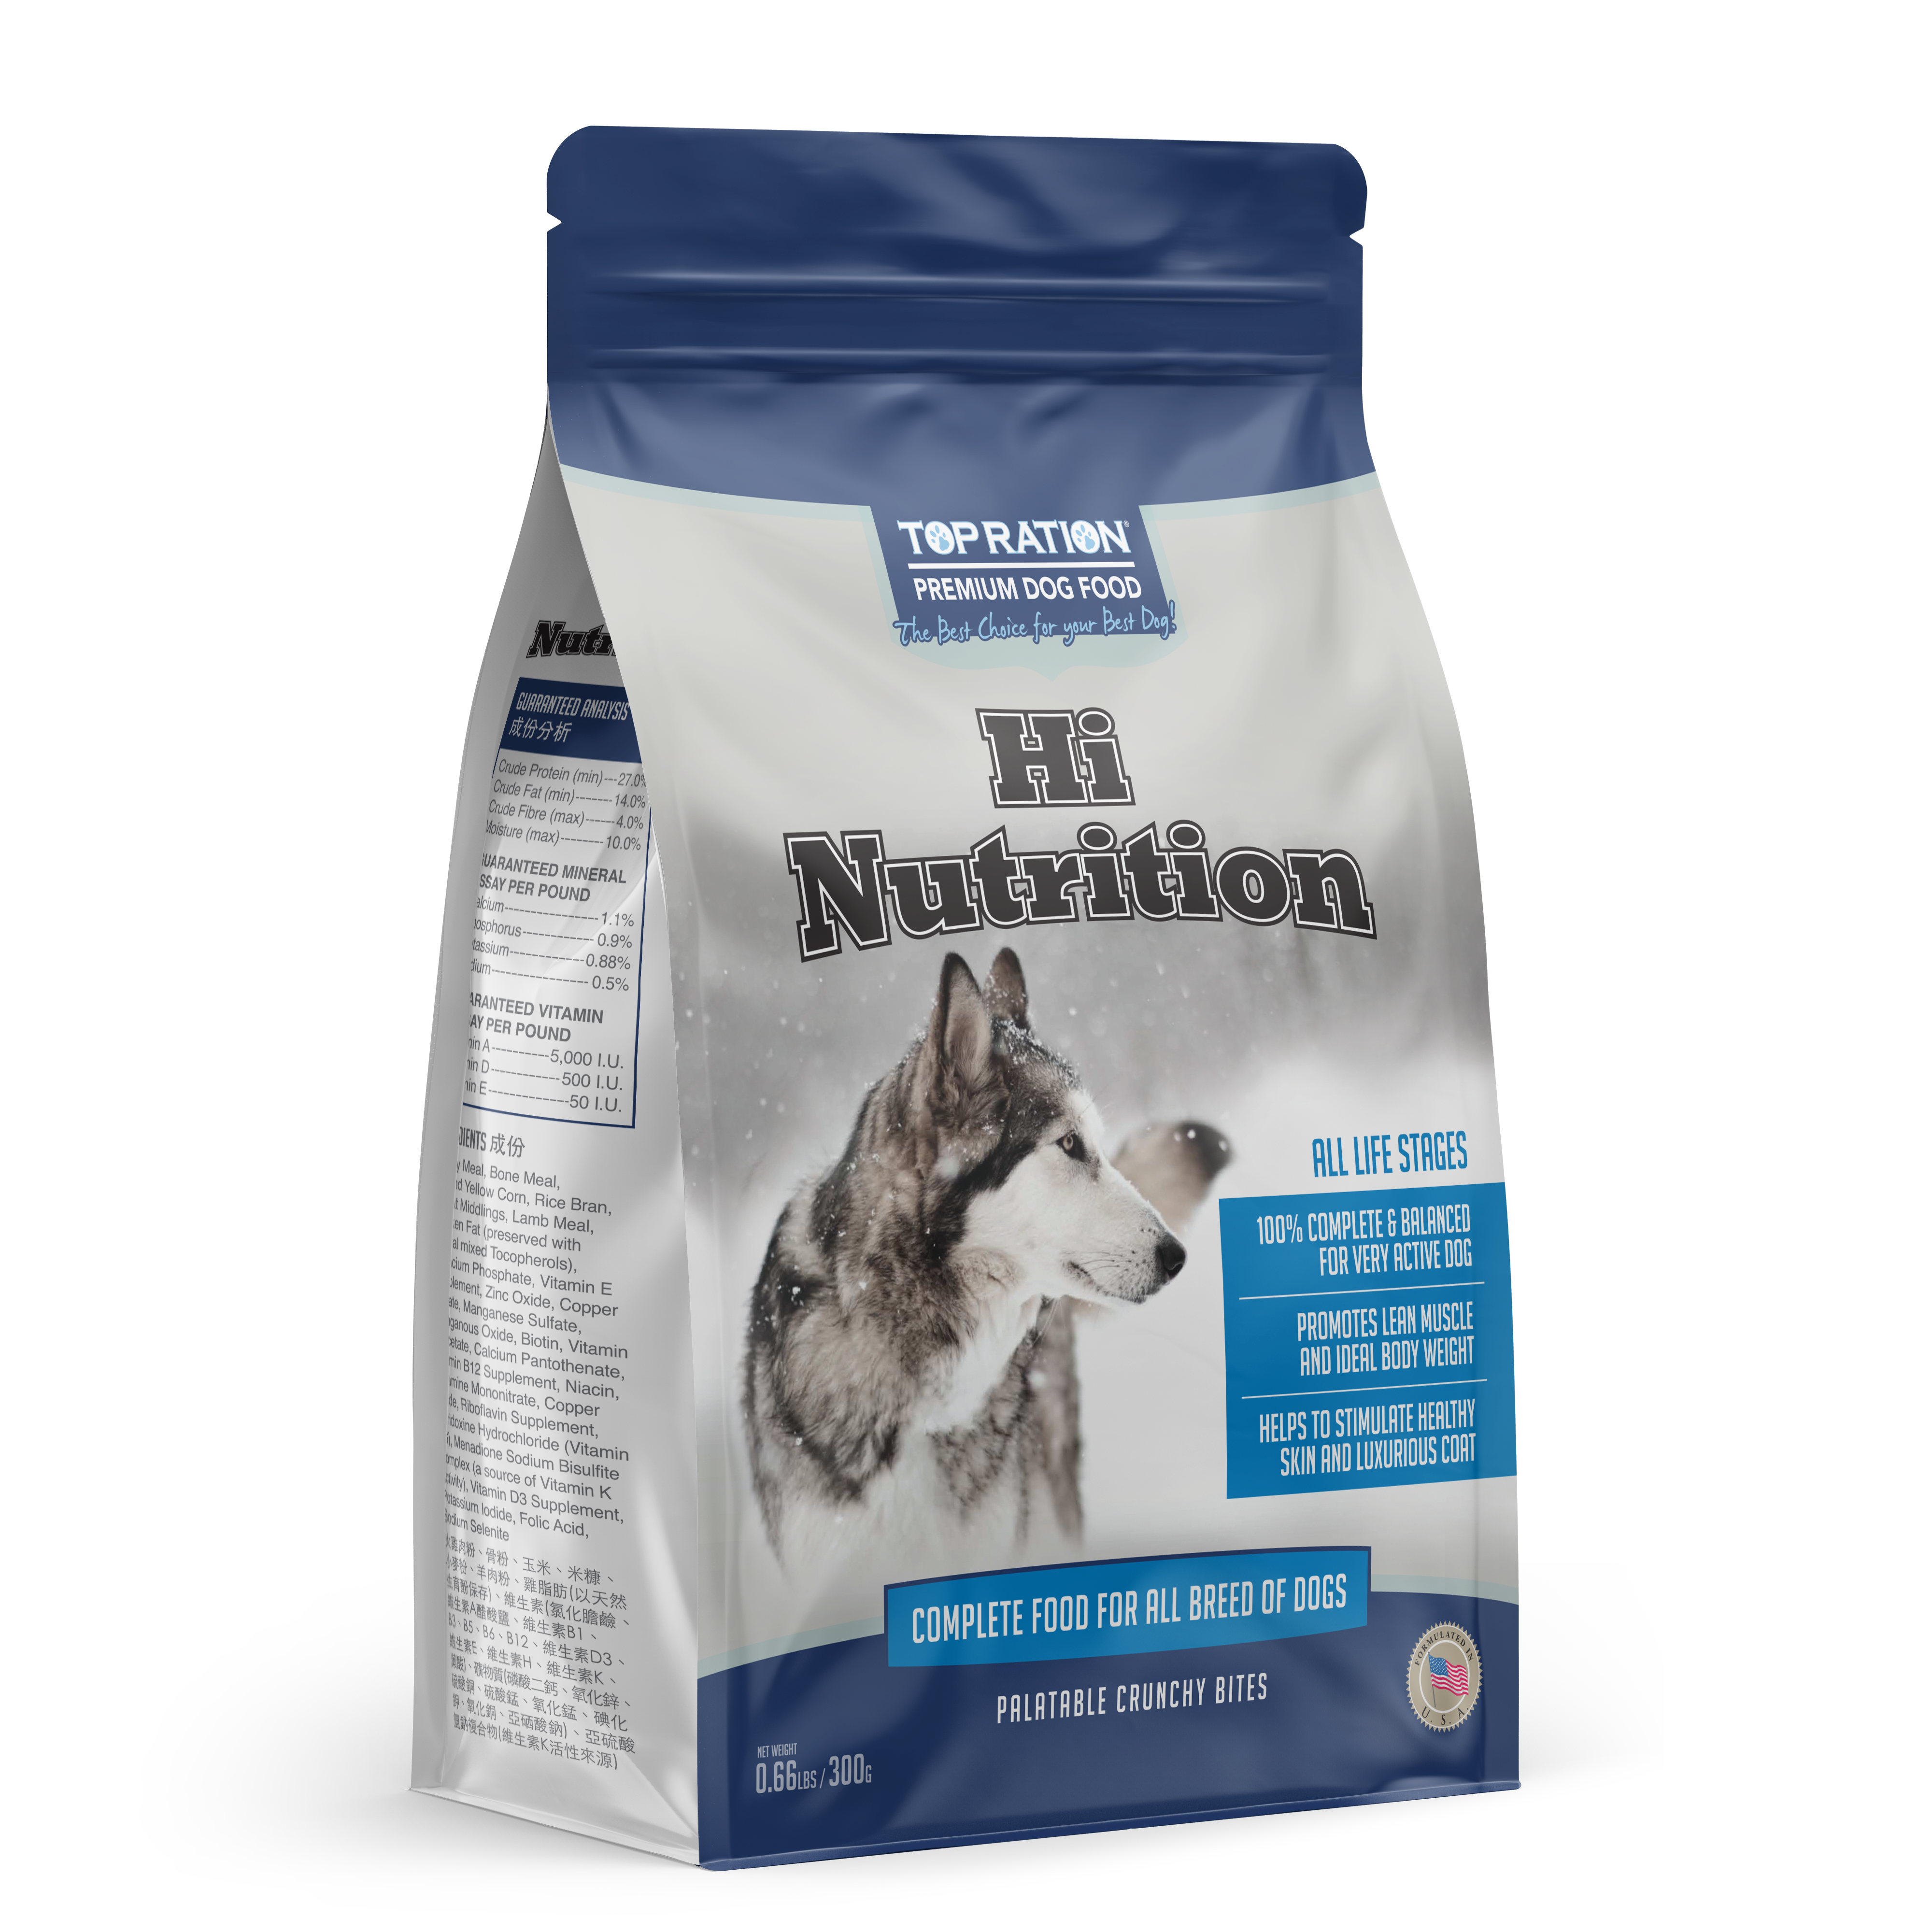 Top Ration Premium Dry Dog Food (Hi Nutrition)